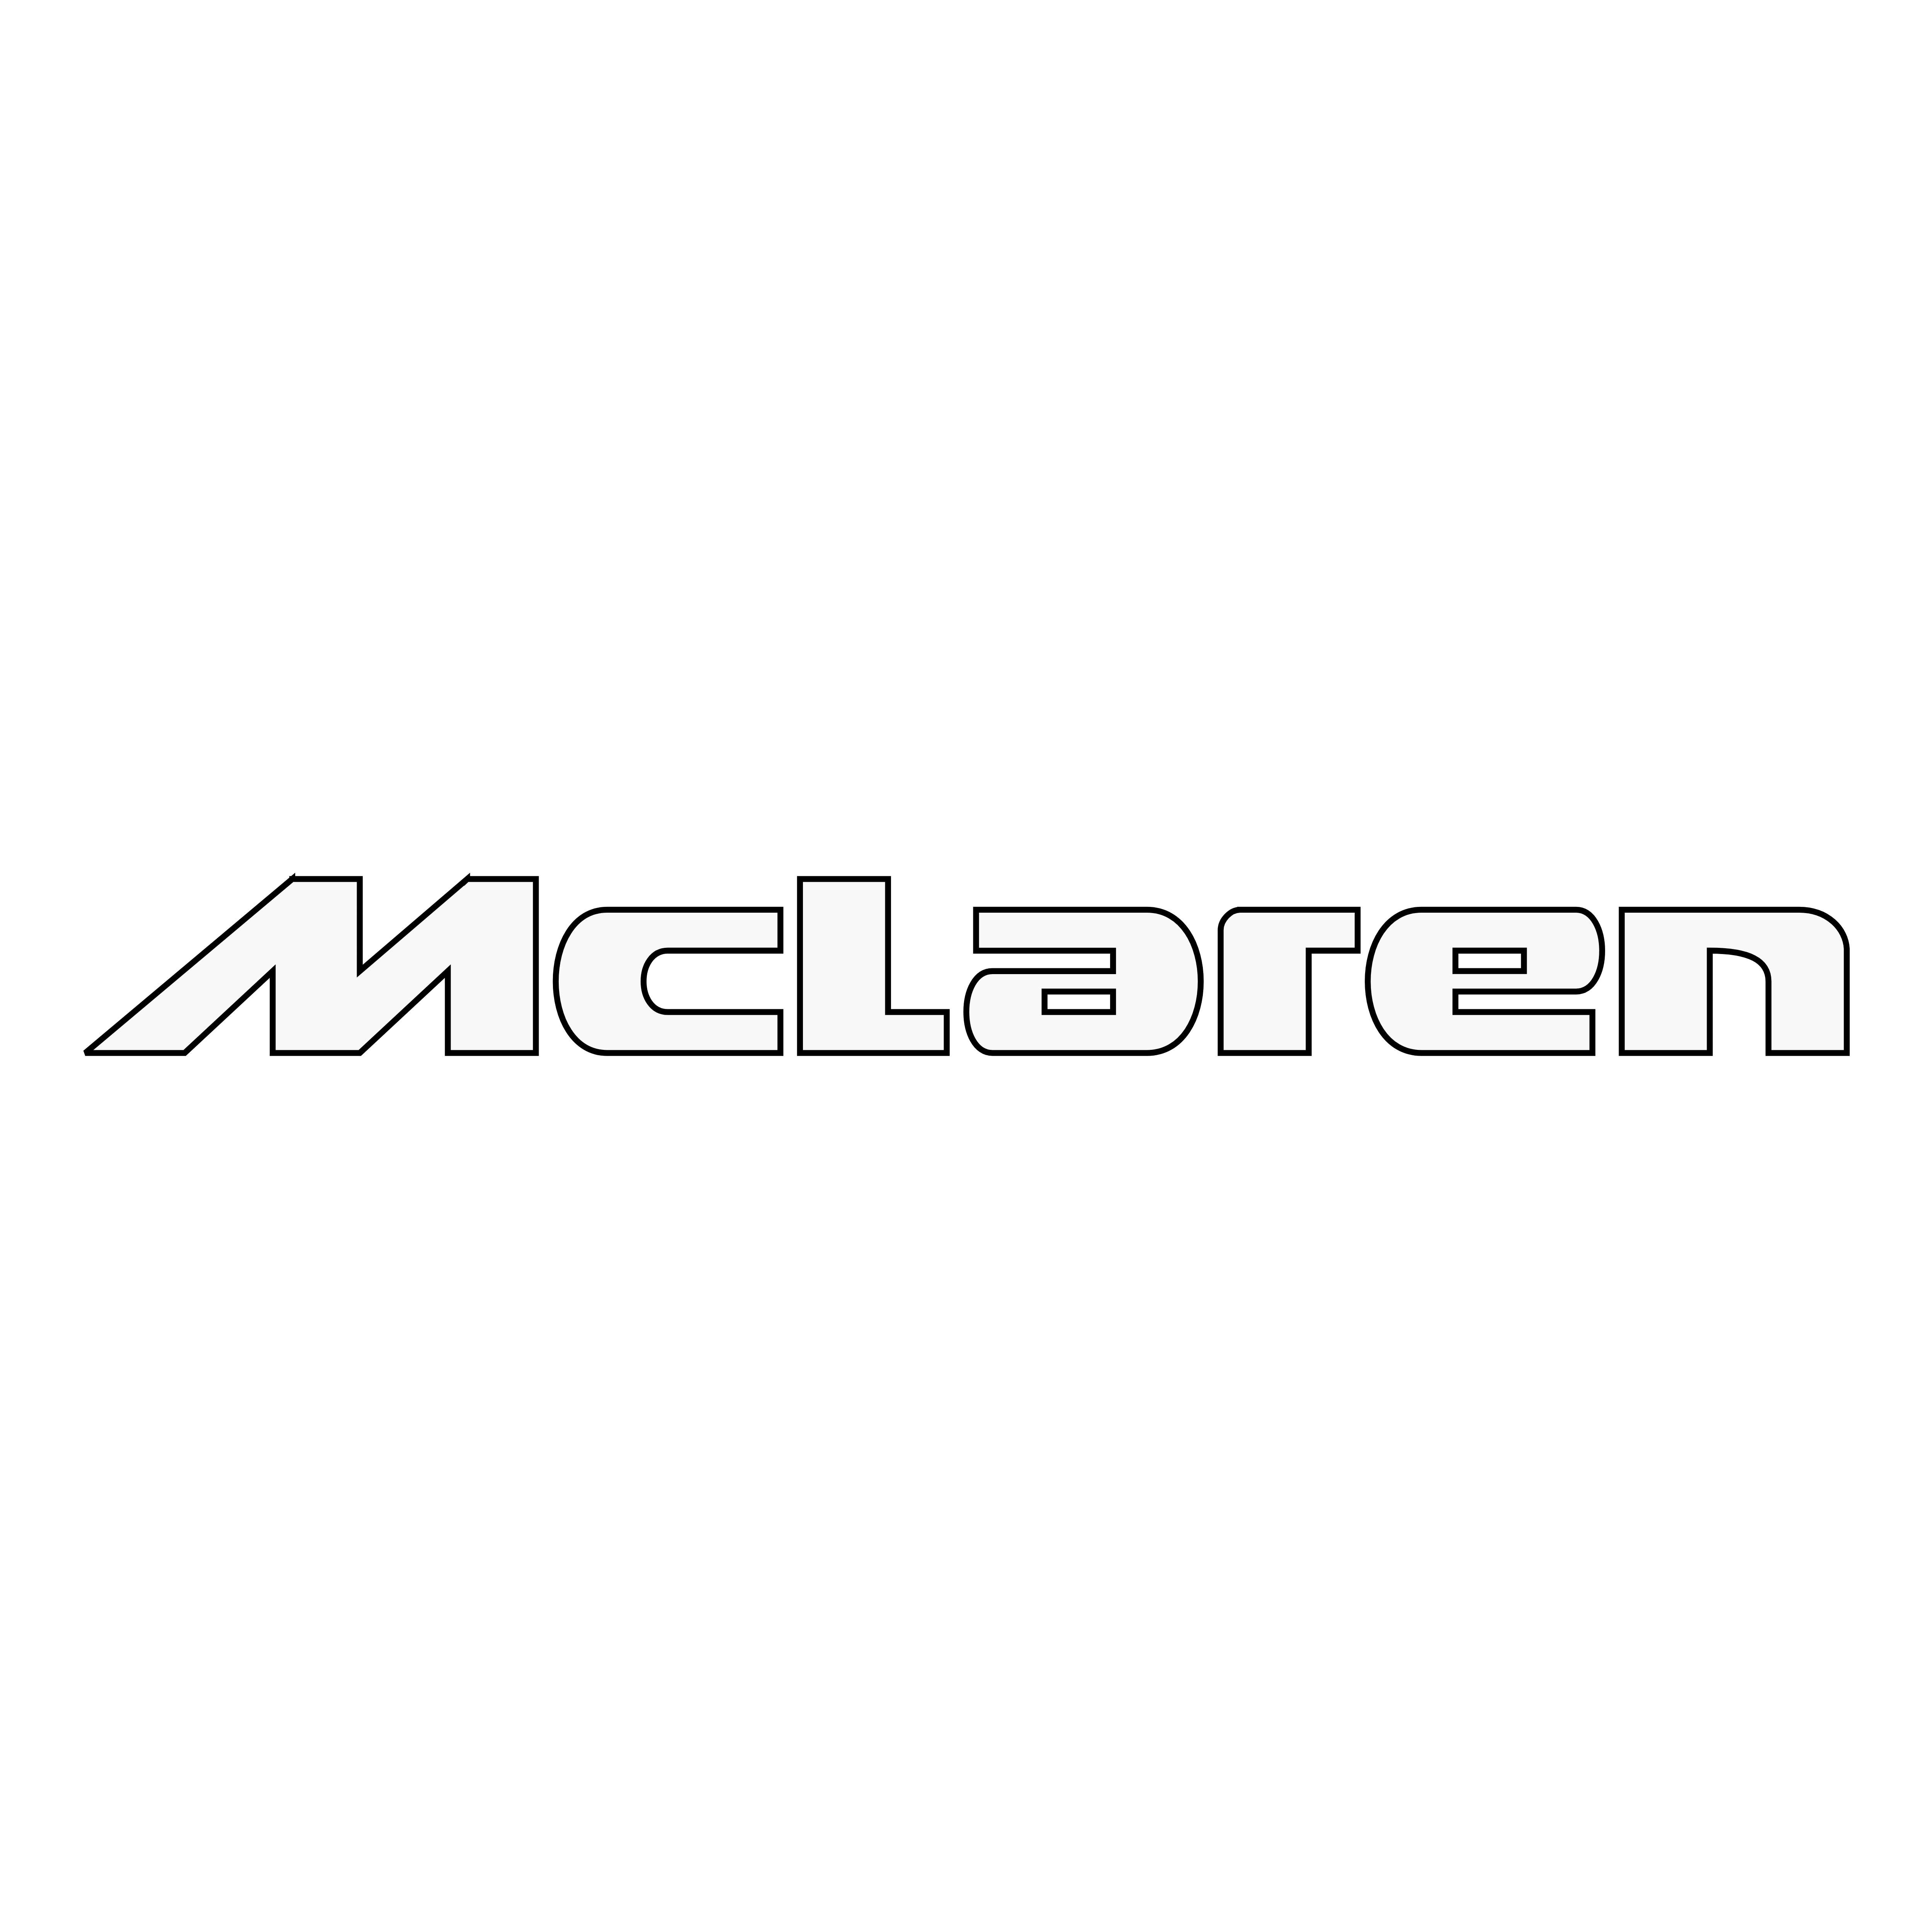 Mclaren Logo Png Images, Free